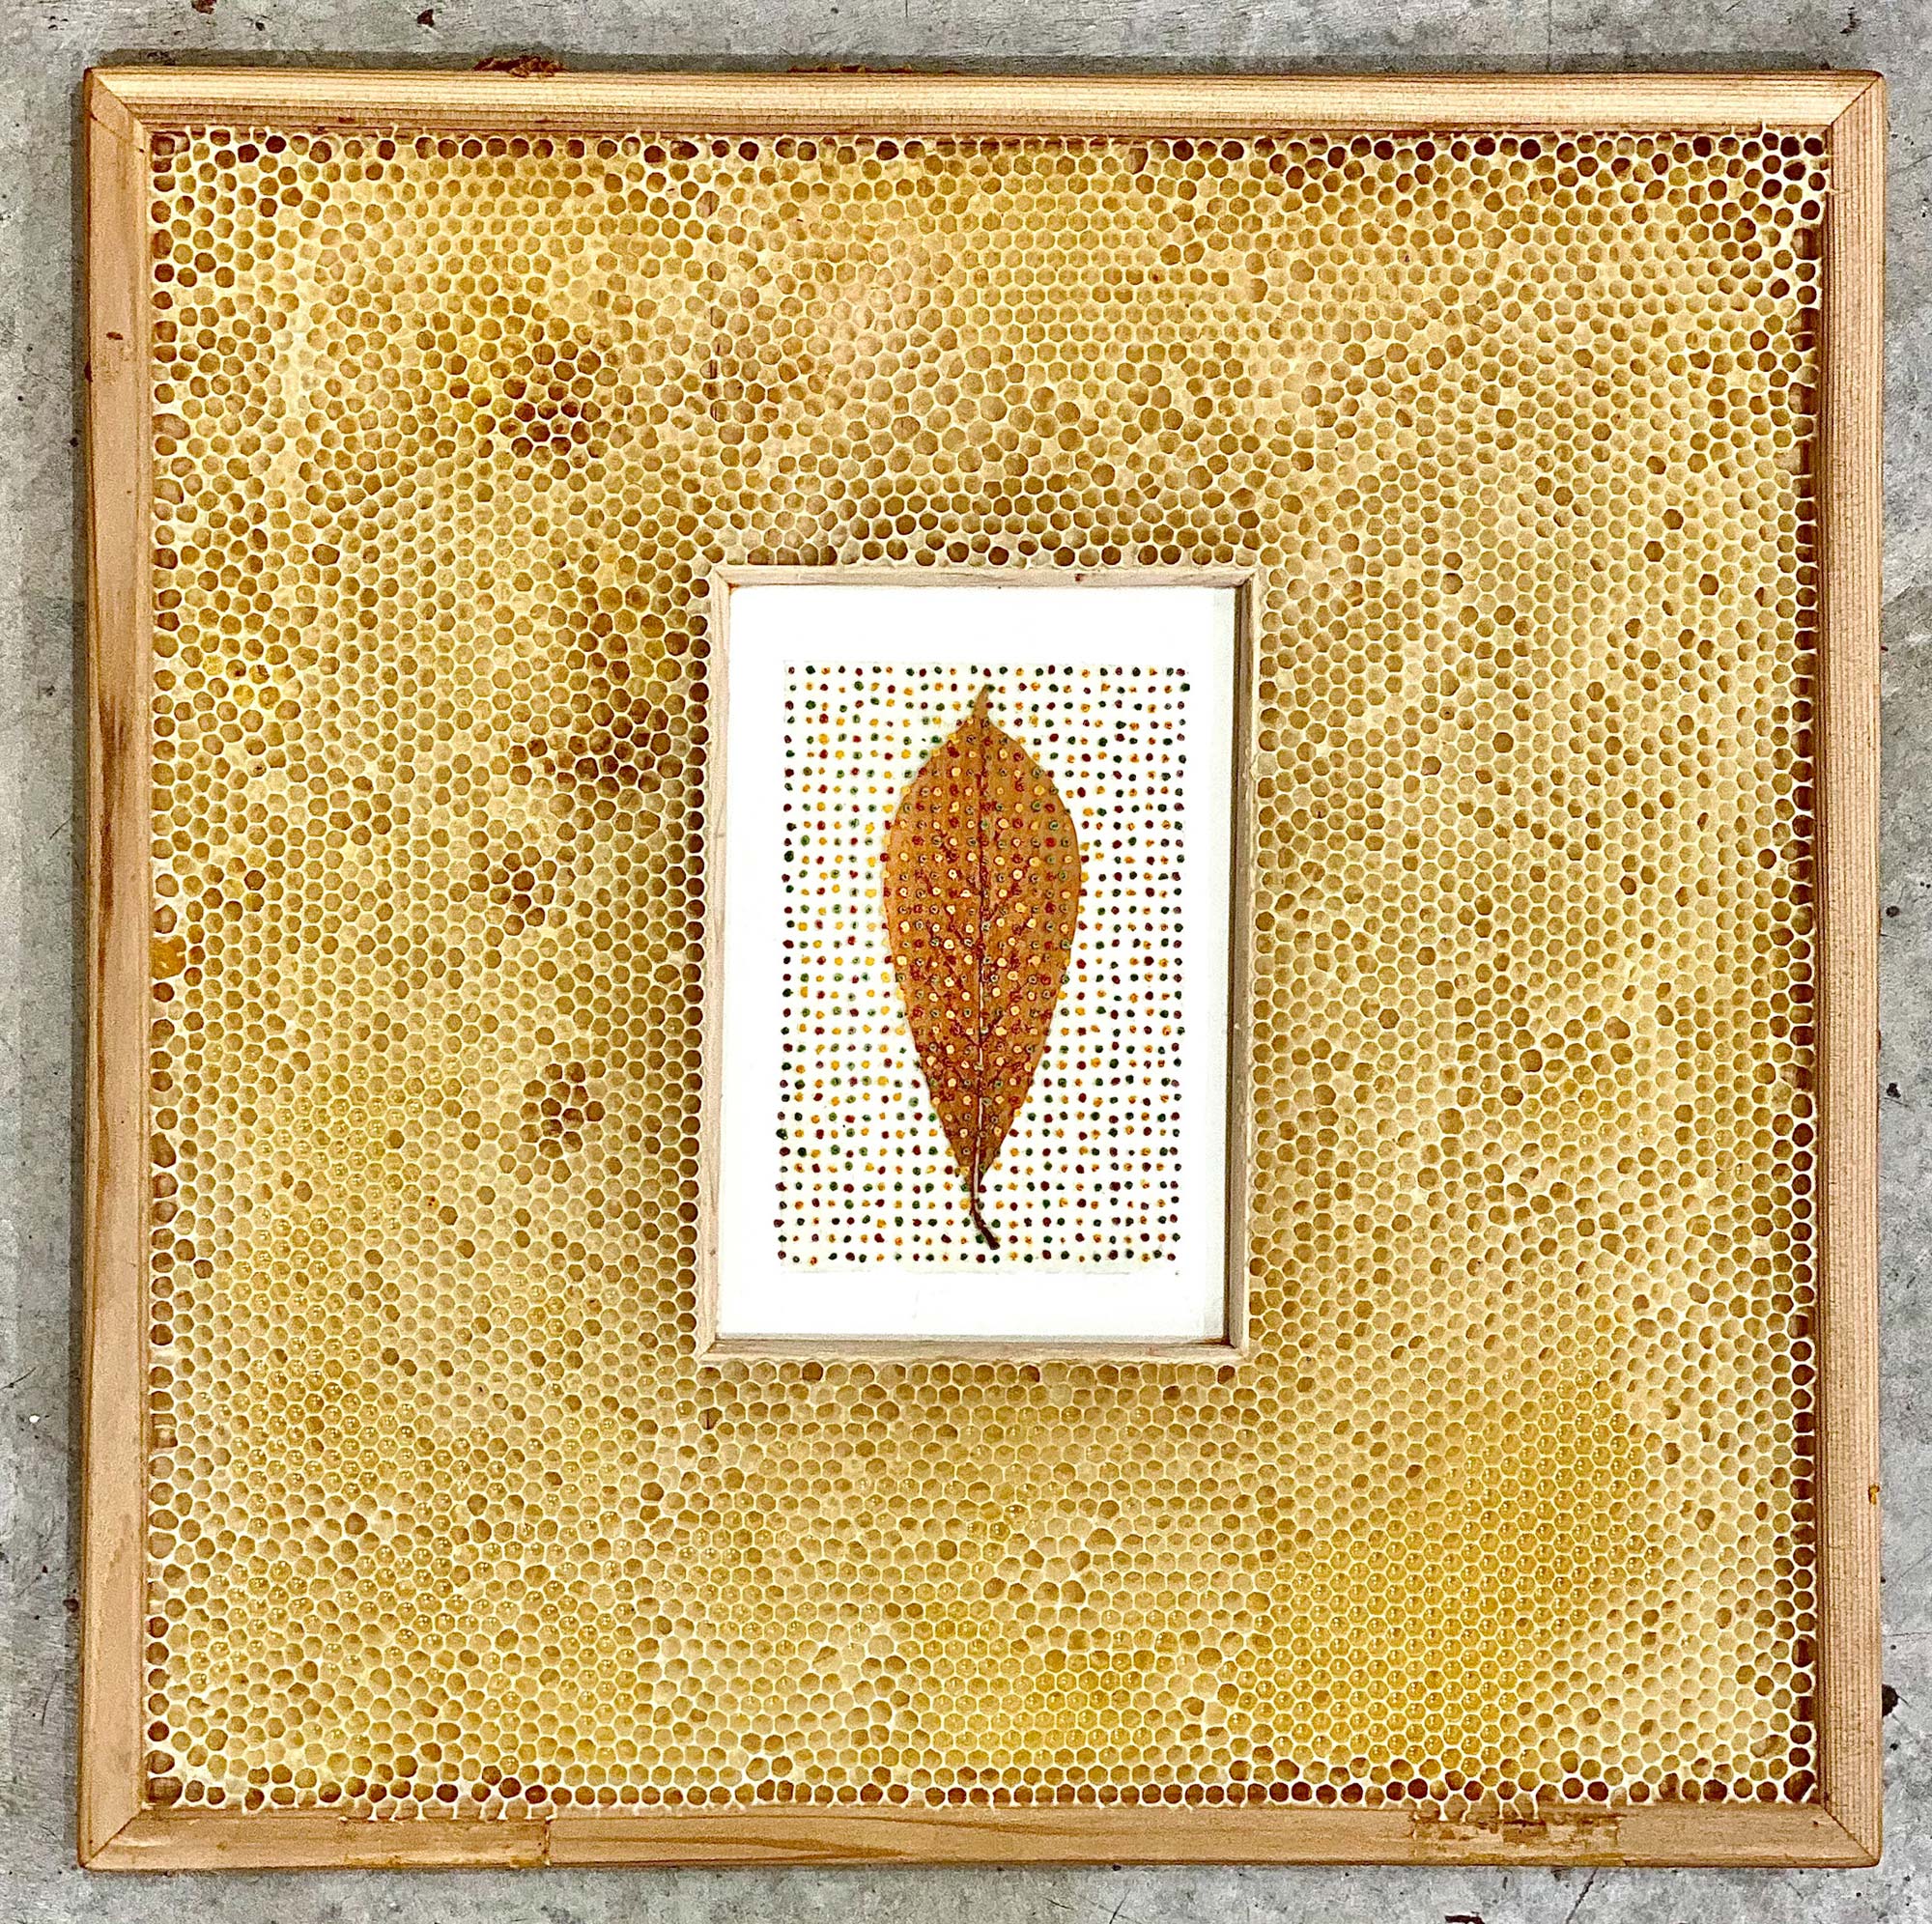 Bees Embed Ava Roth’s Organic Mixed-Media Artworks in Waxy Honeycomb